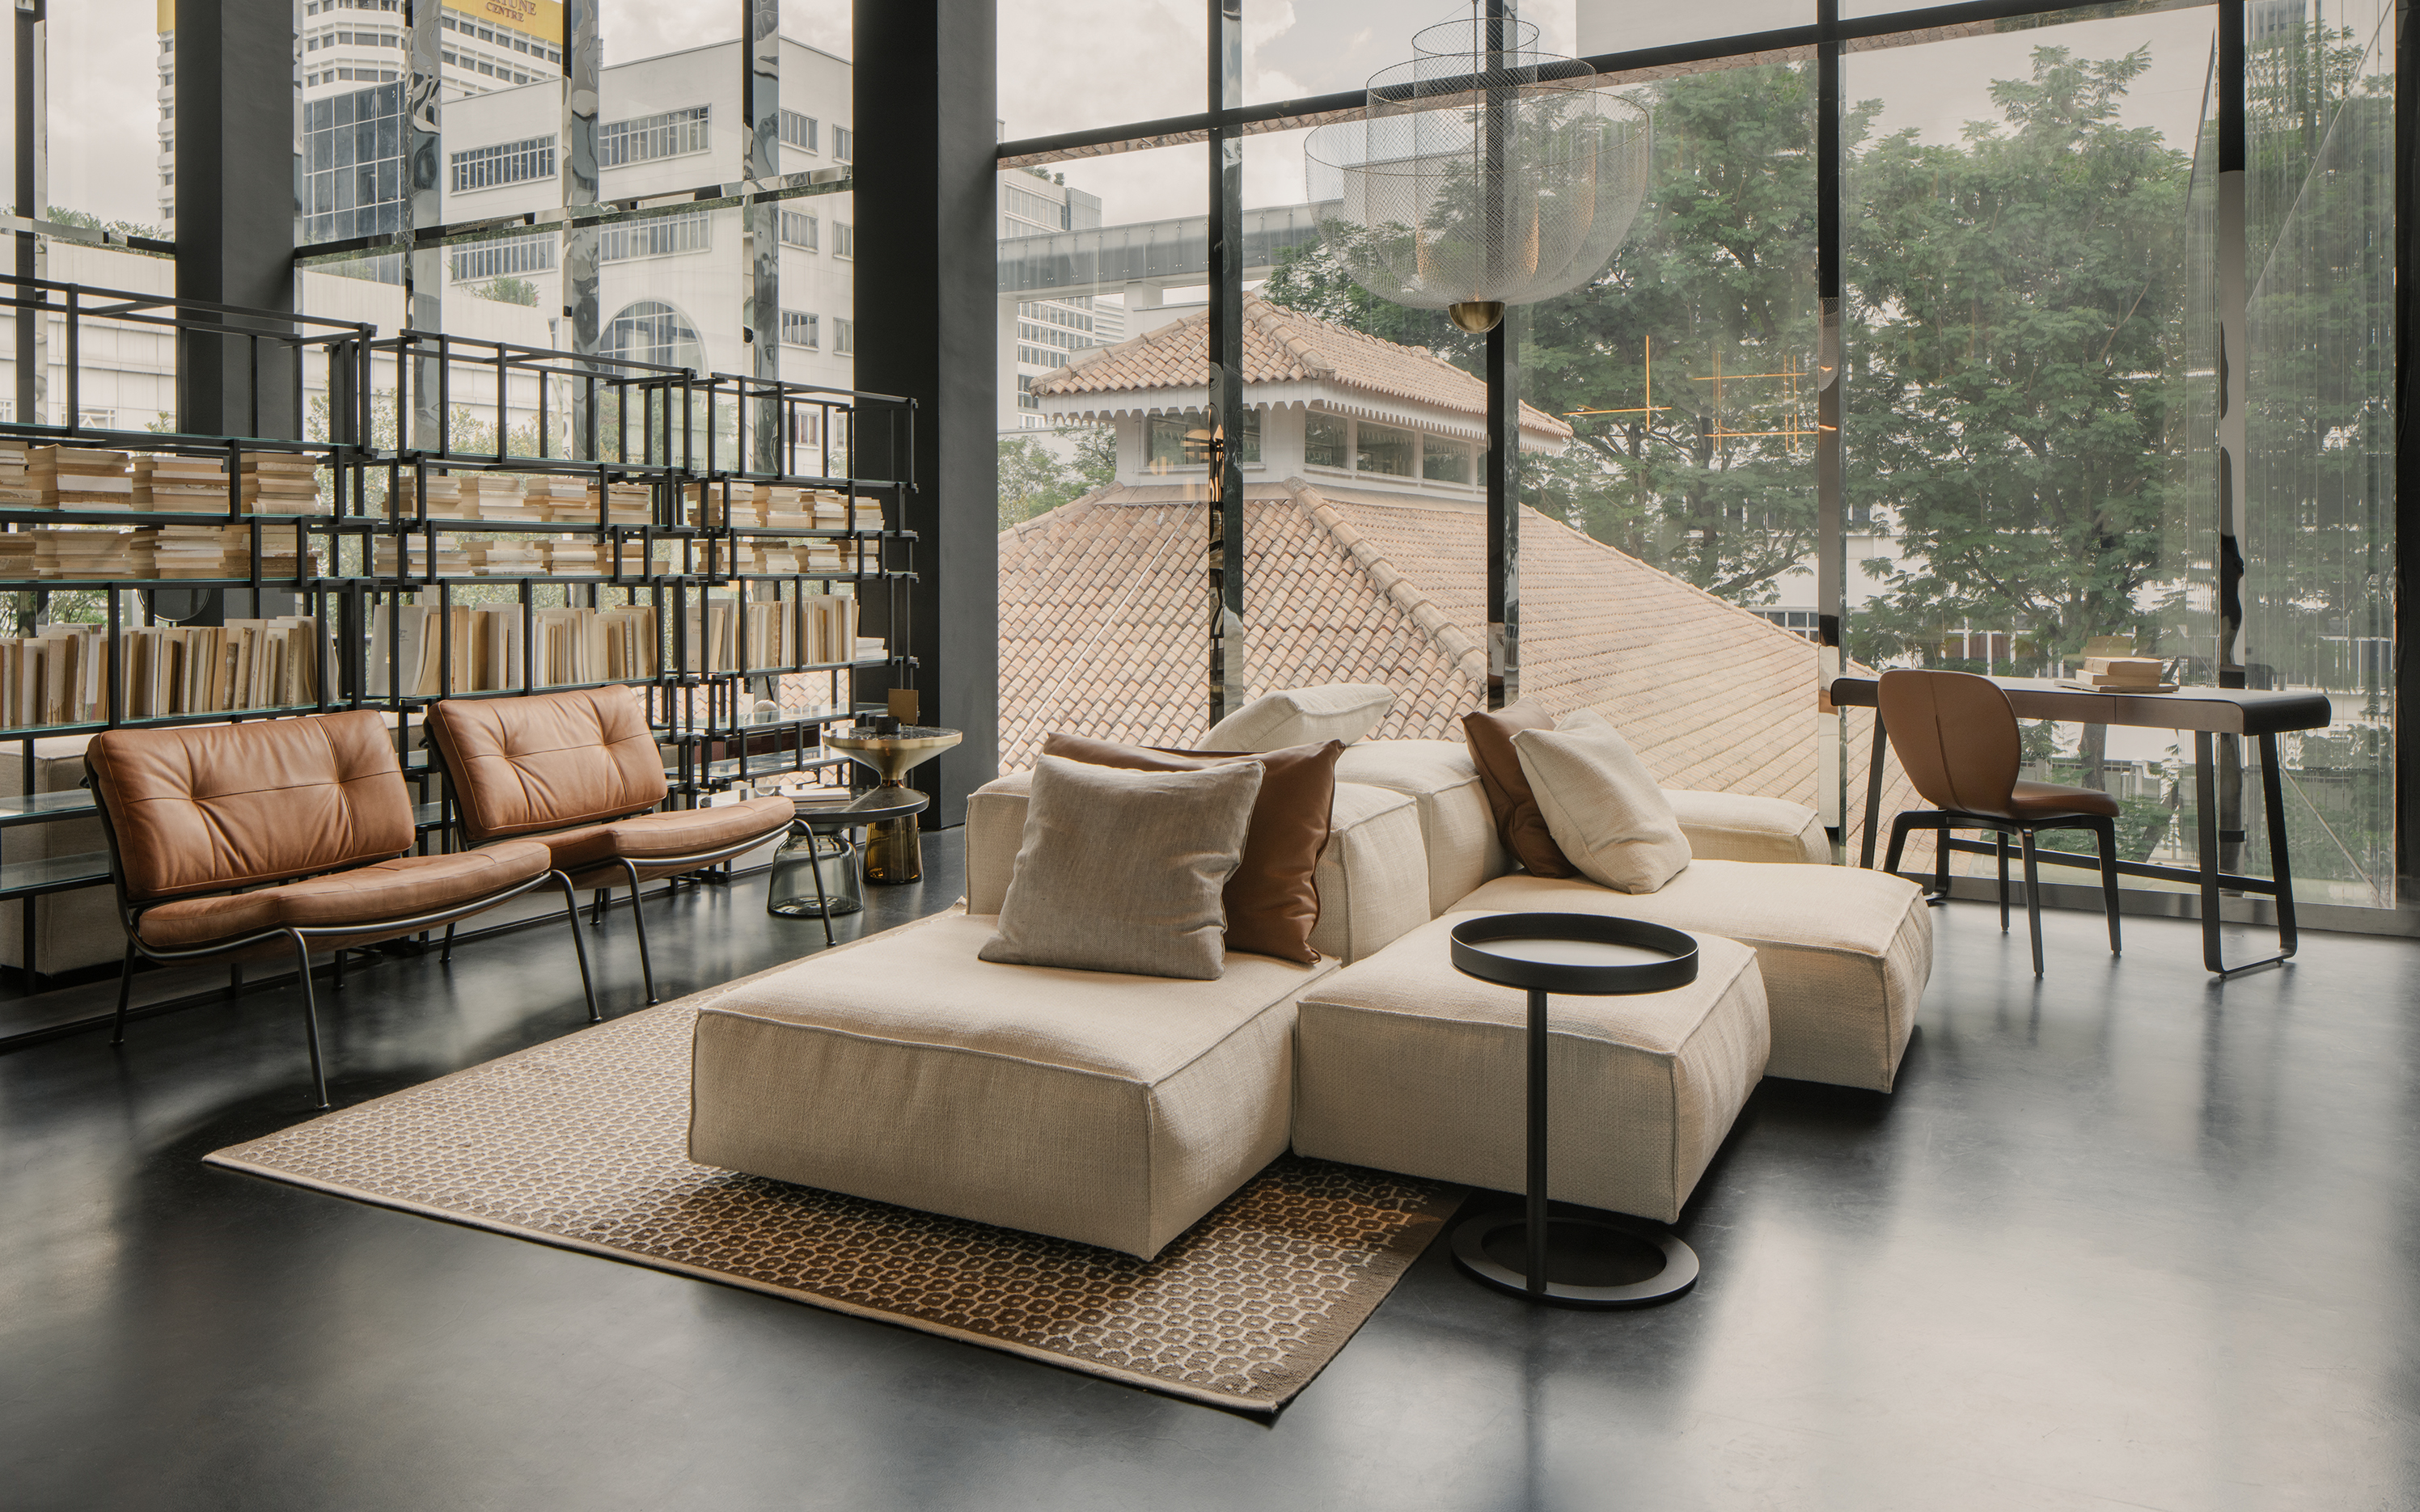 The Frog chairs and Extrasoft sofa designed by Piero Lissoni for Living Divani. Image © Khoo Guo Jie, Khoogj.